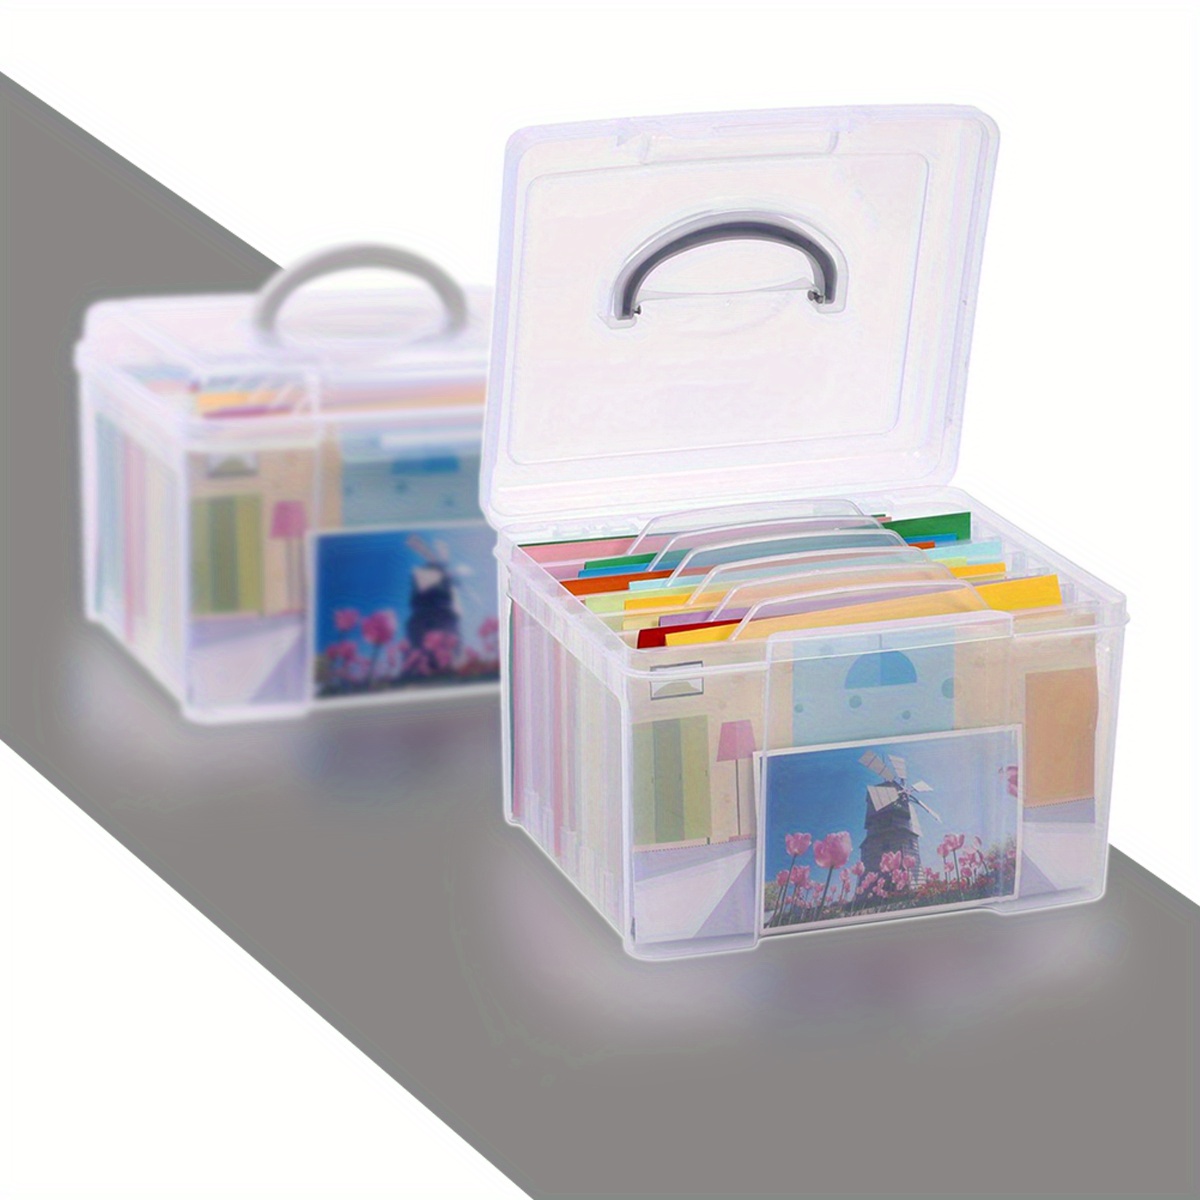 Transparent Clear Handle Boxes - TEM IMPORTS™